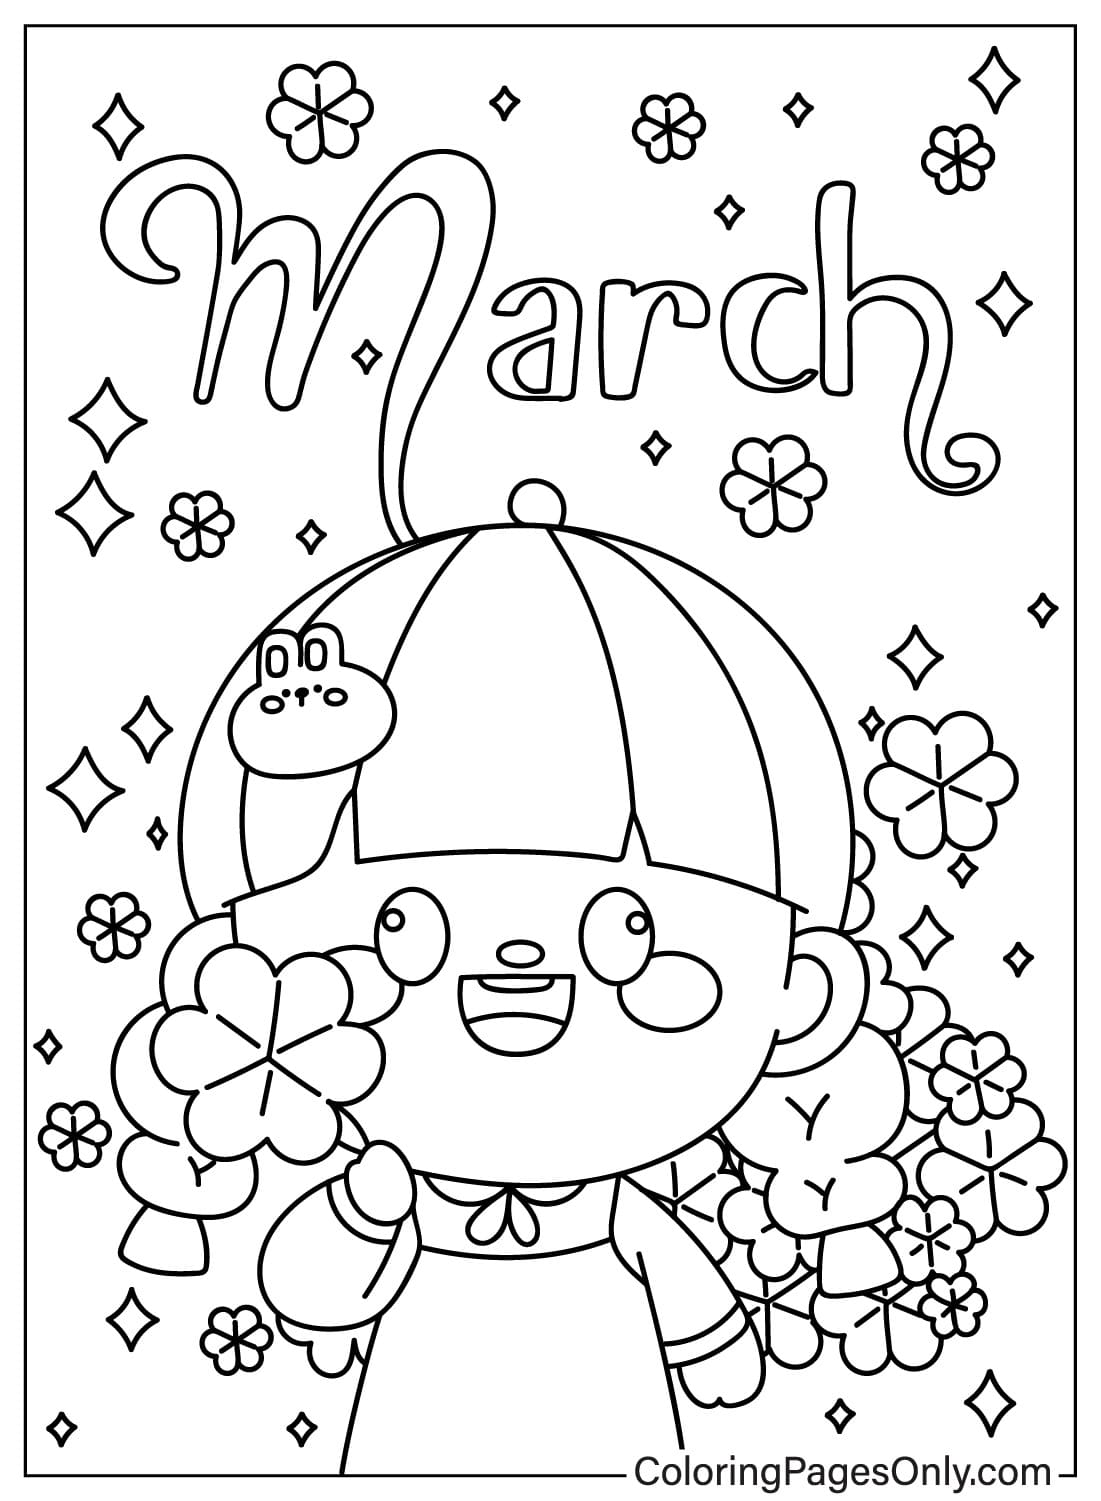 Dibujo para colorear de marzo imprimible gratis a partir de marzo de 2024